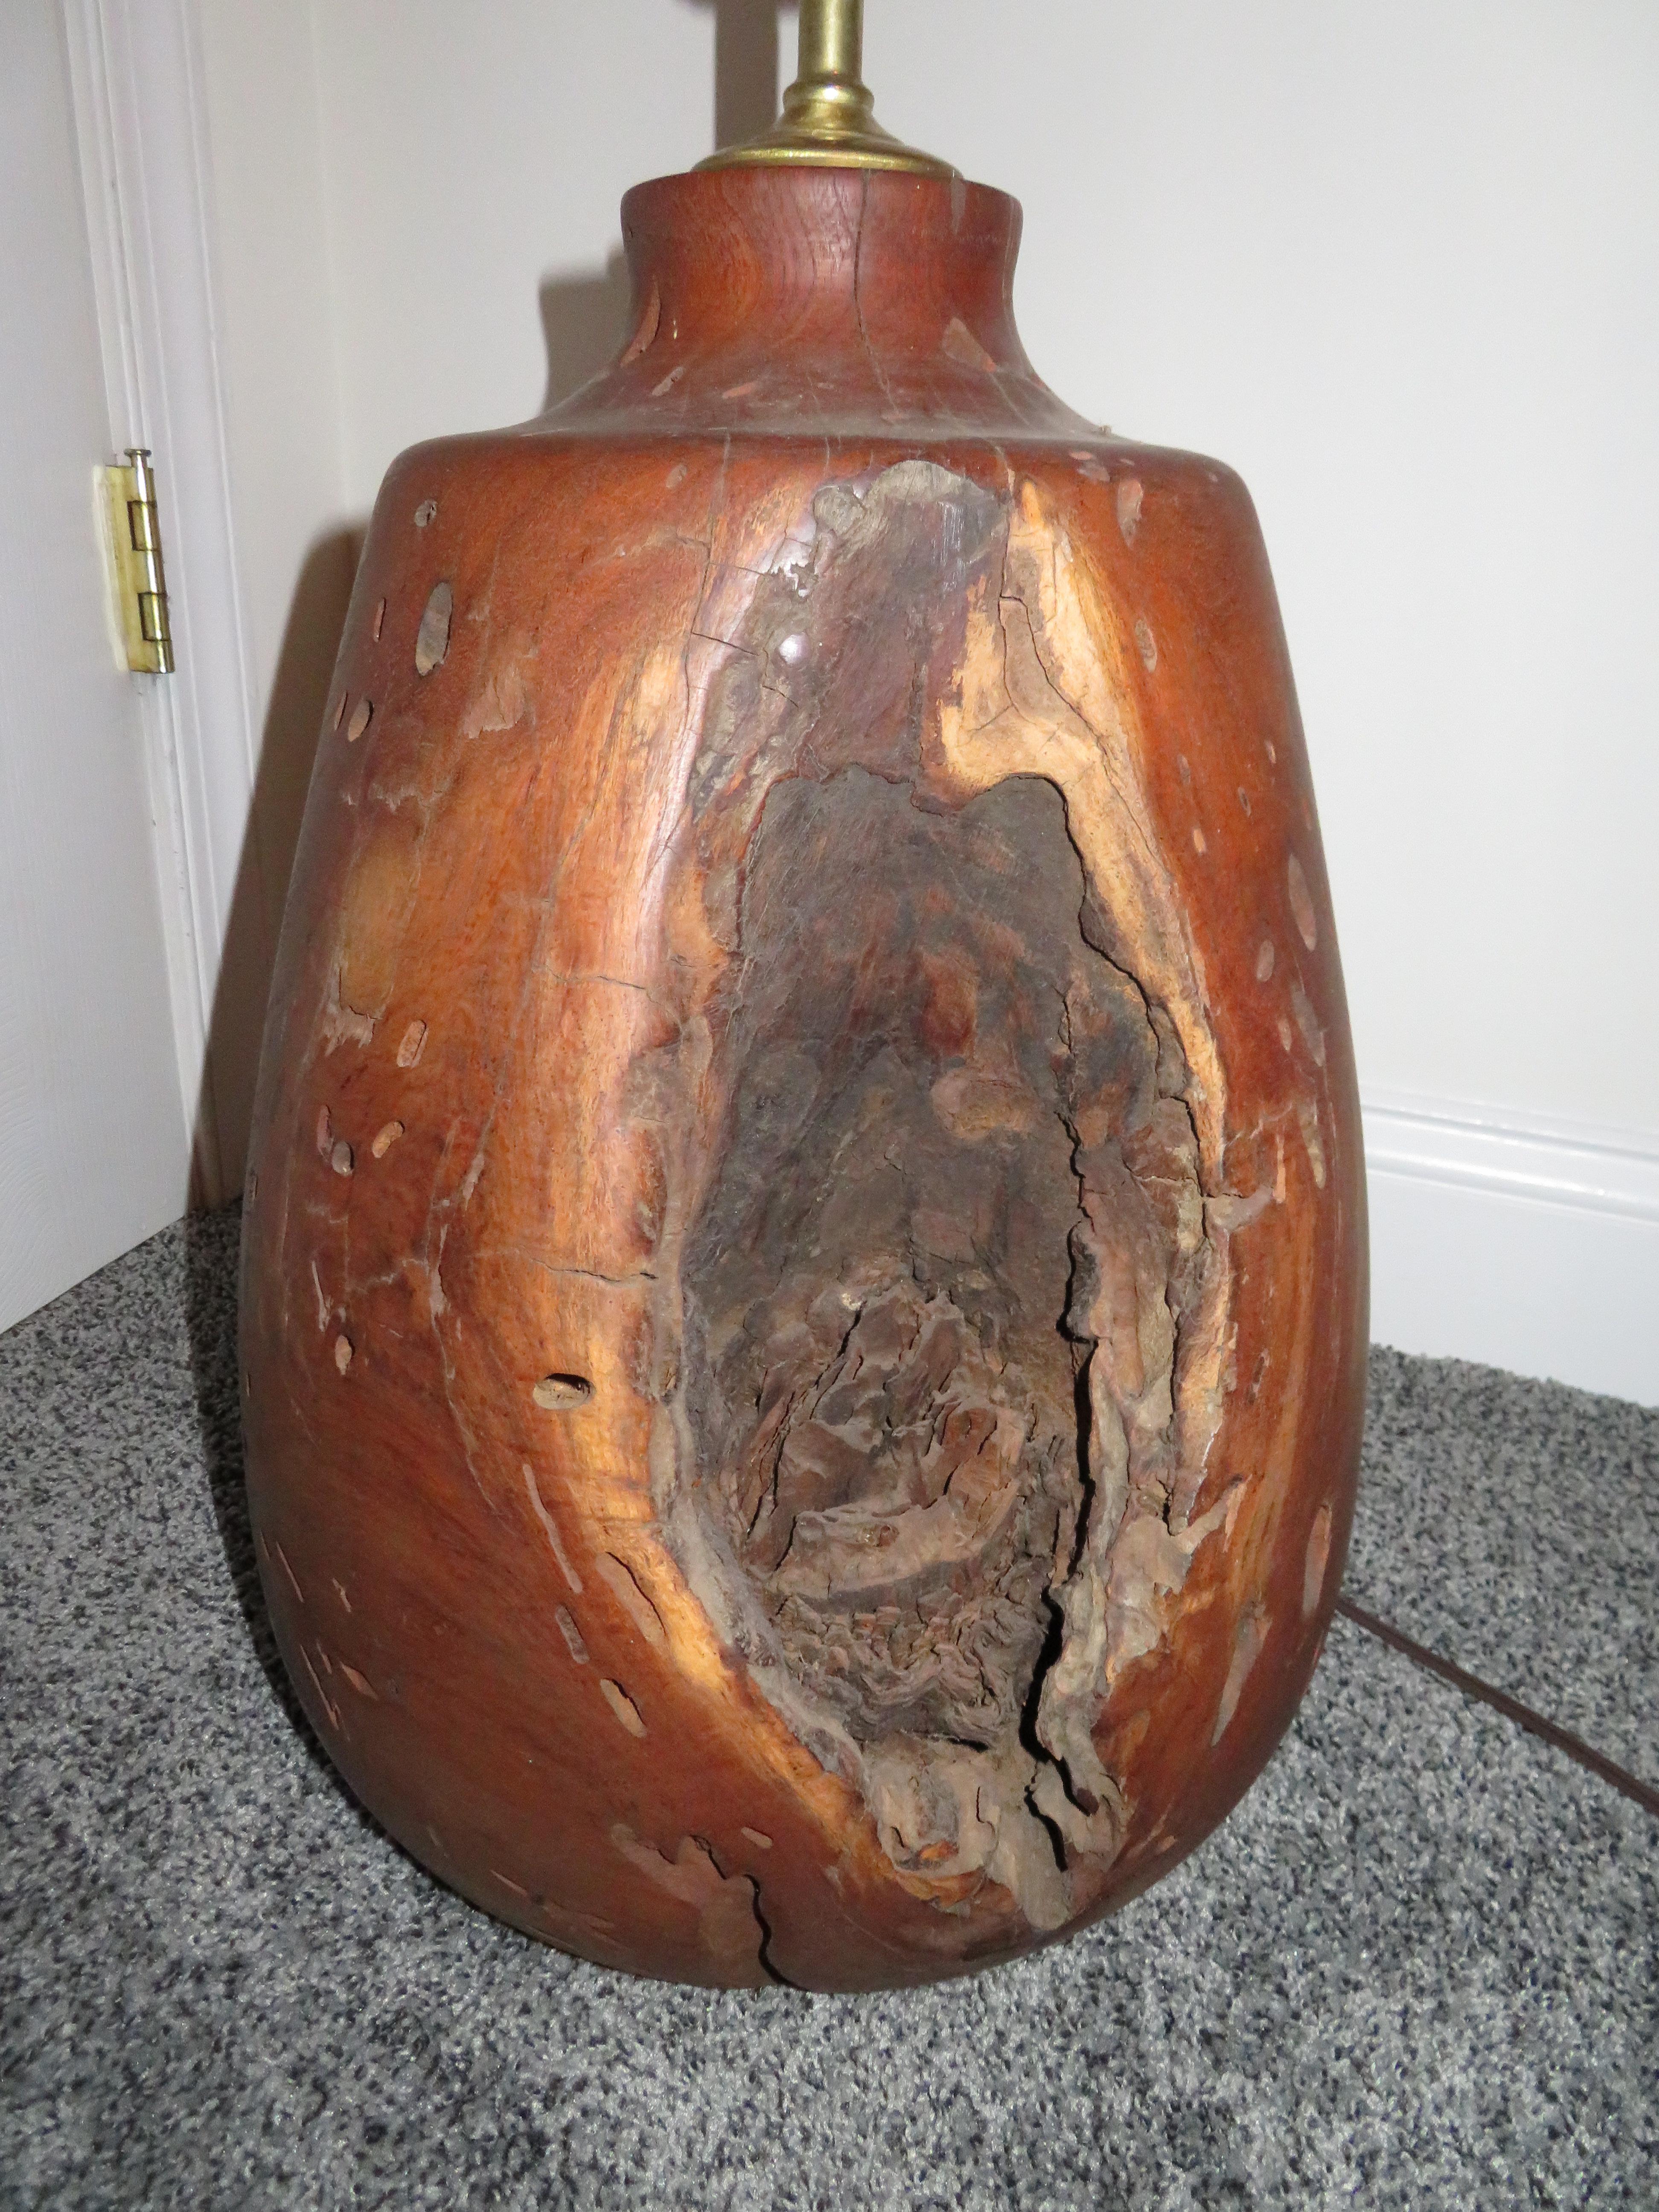 Heavy and large organic modern Manzanita root lamp.